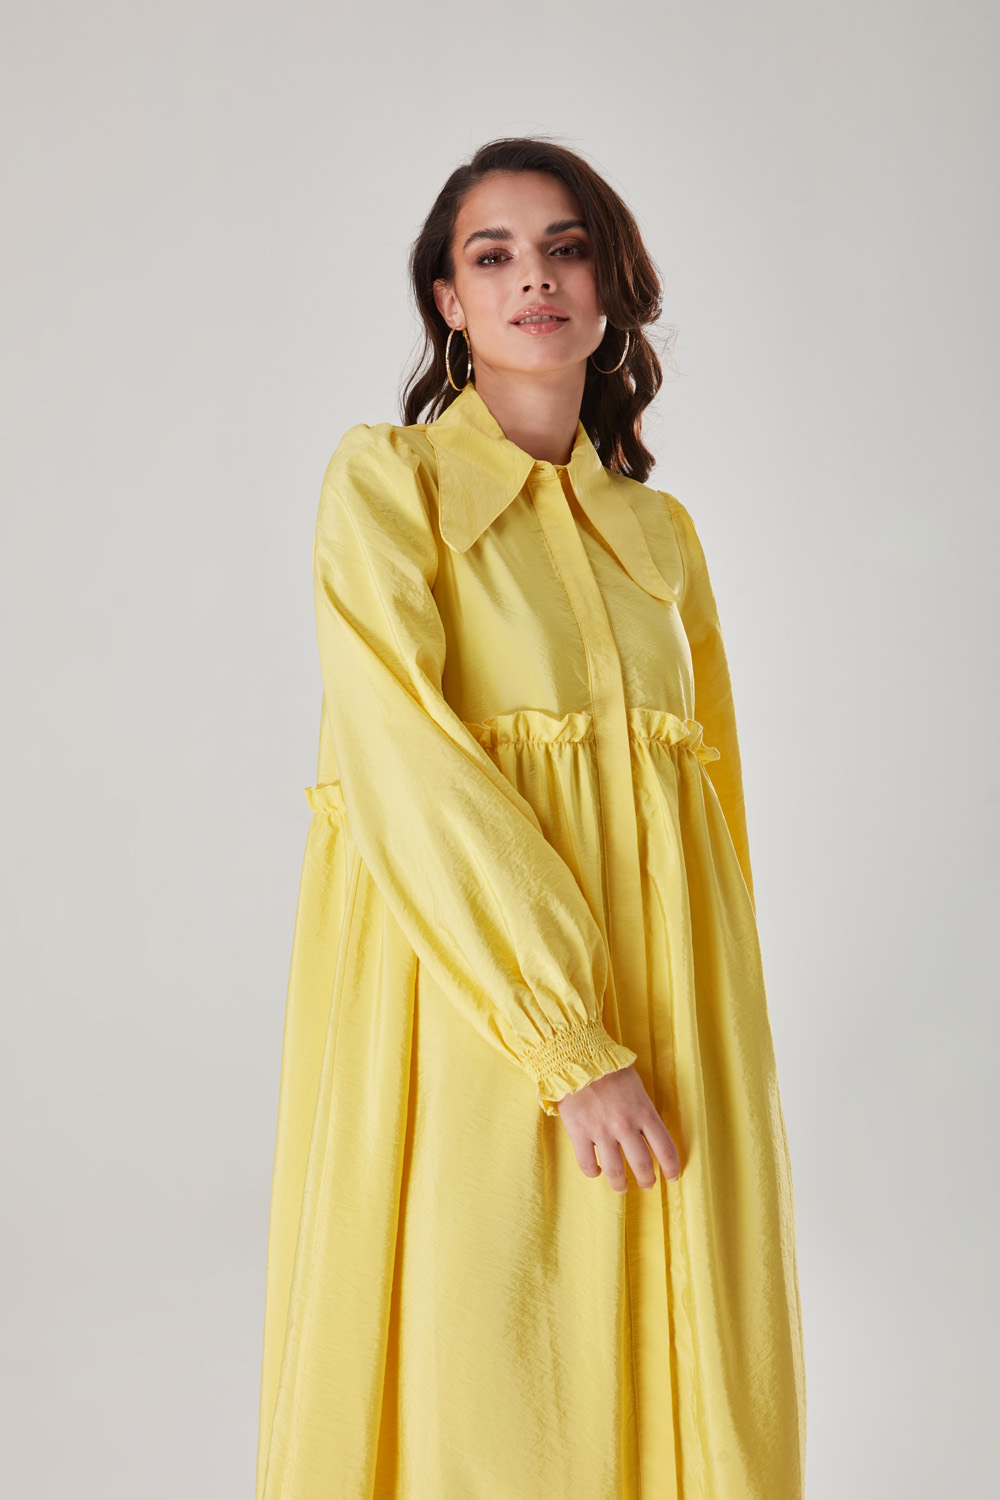 Collar Detailed Designed Yellow Dress